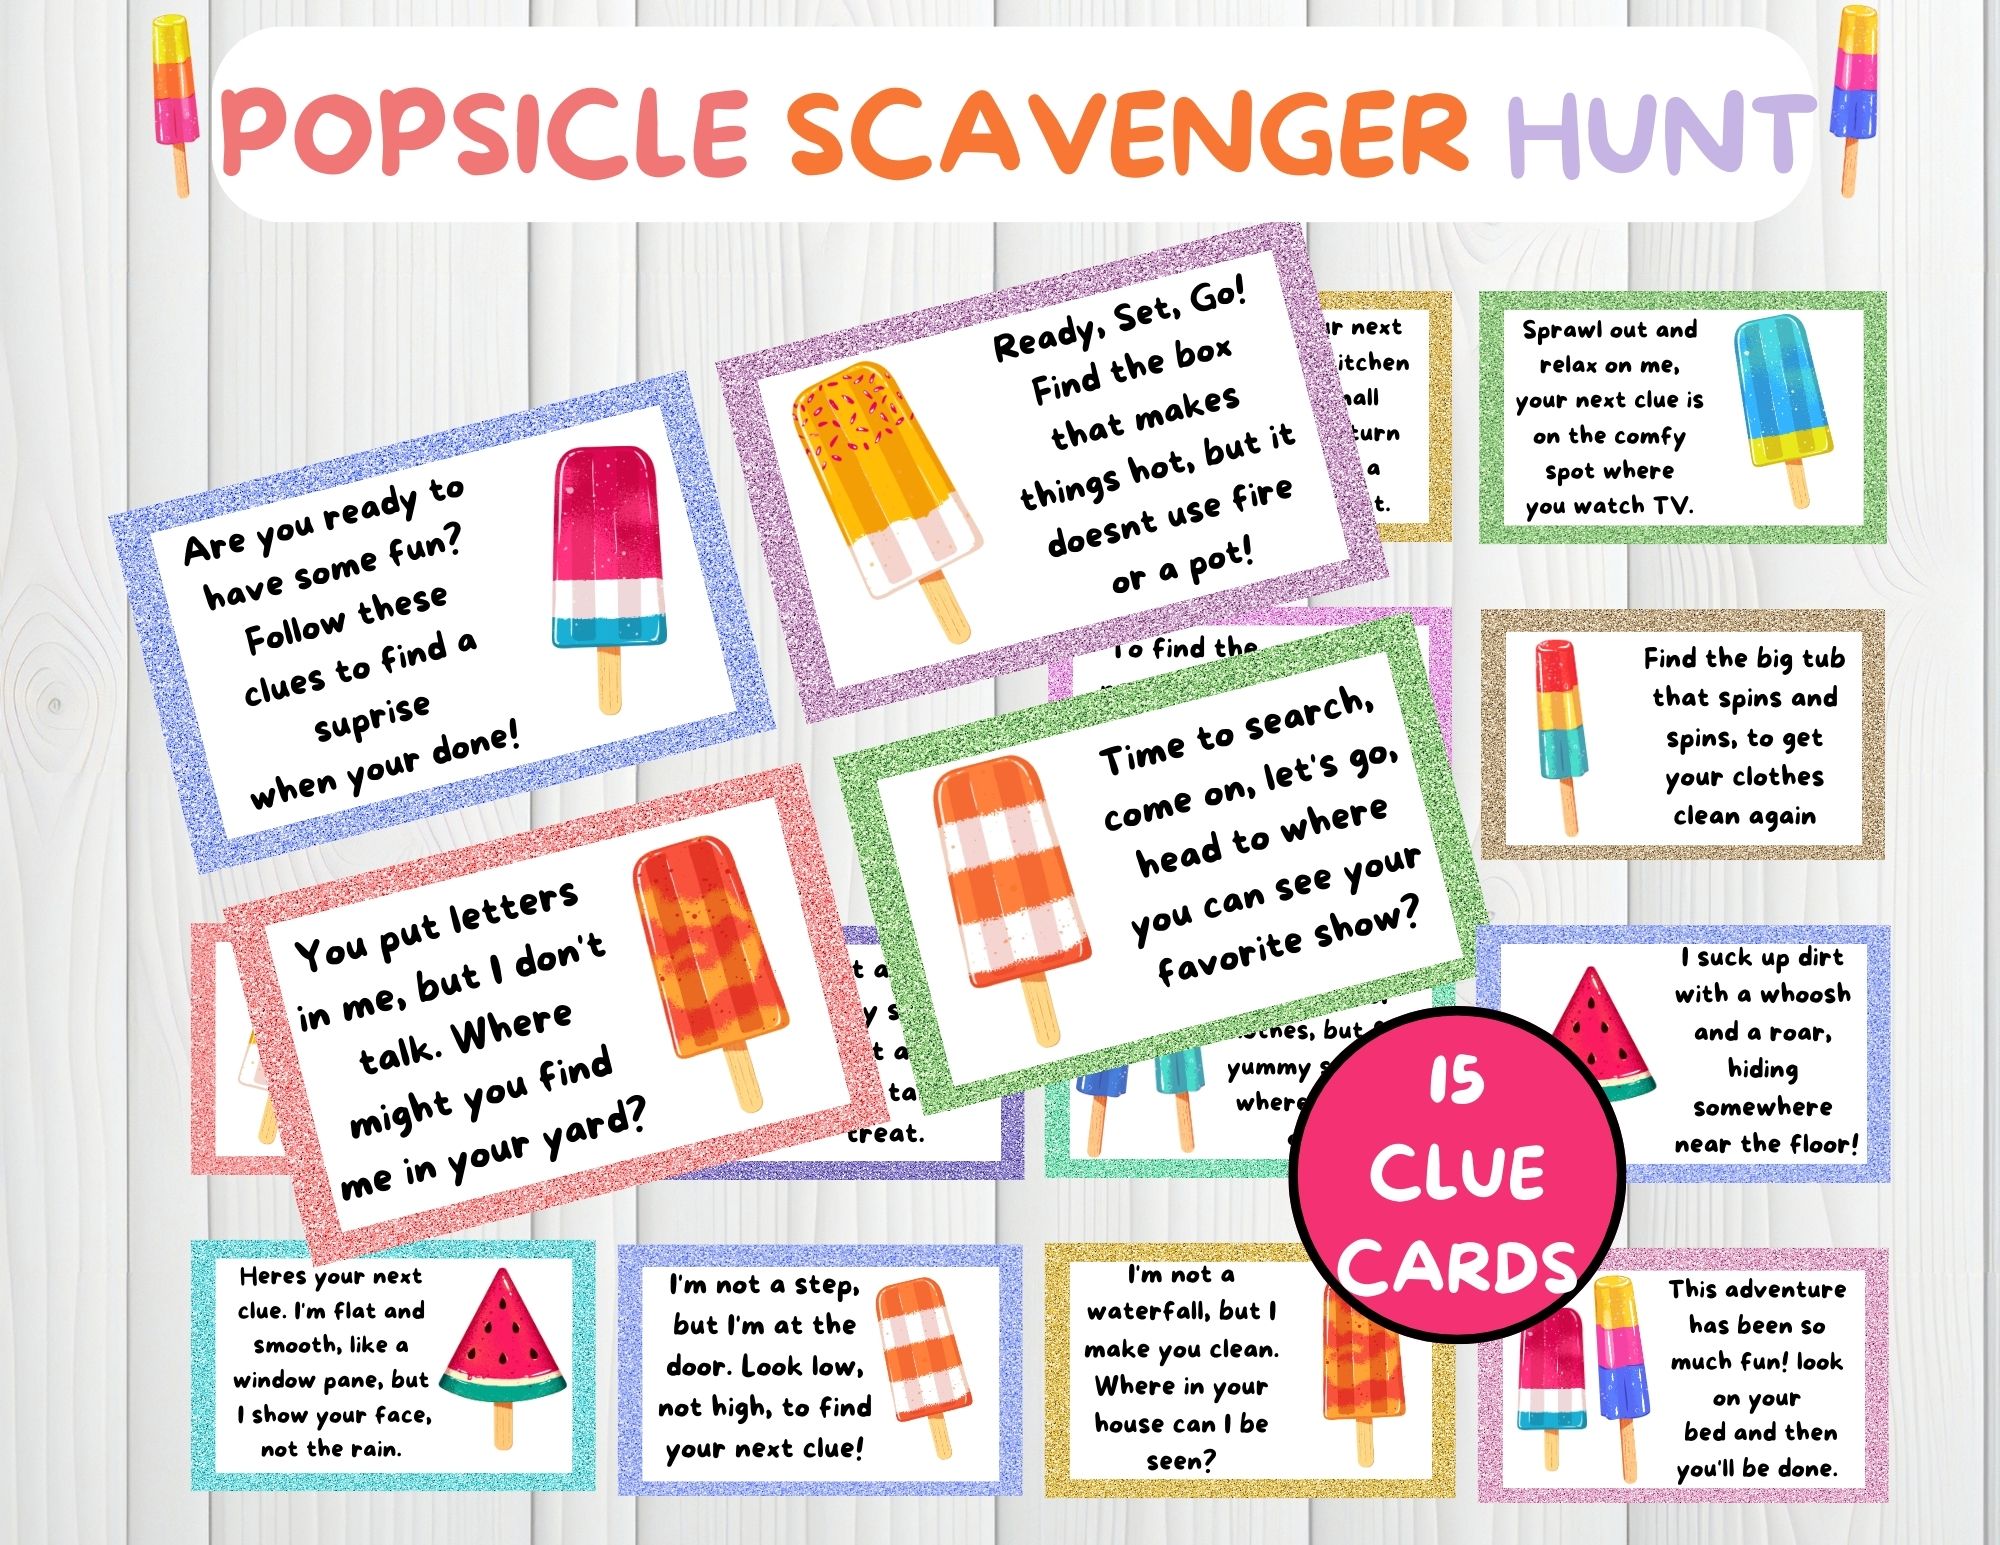 Popsicle scavenger hunt cover image